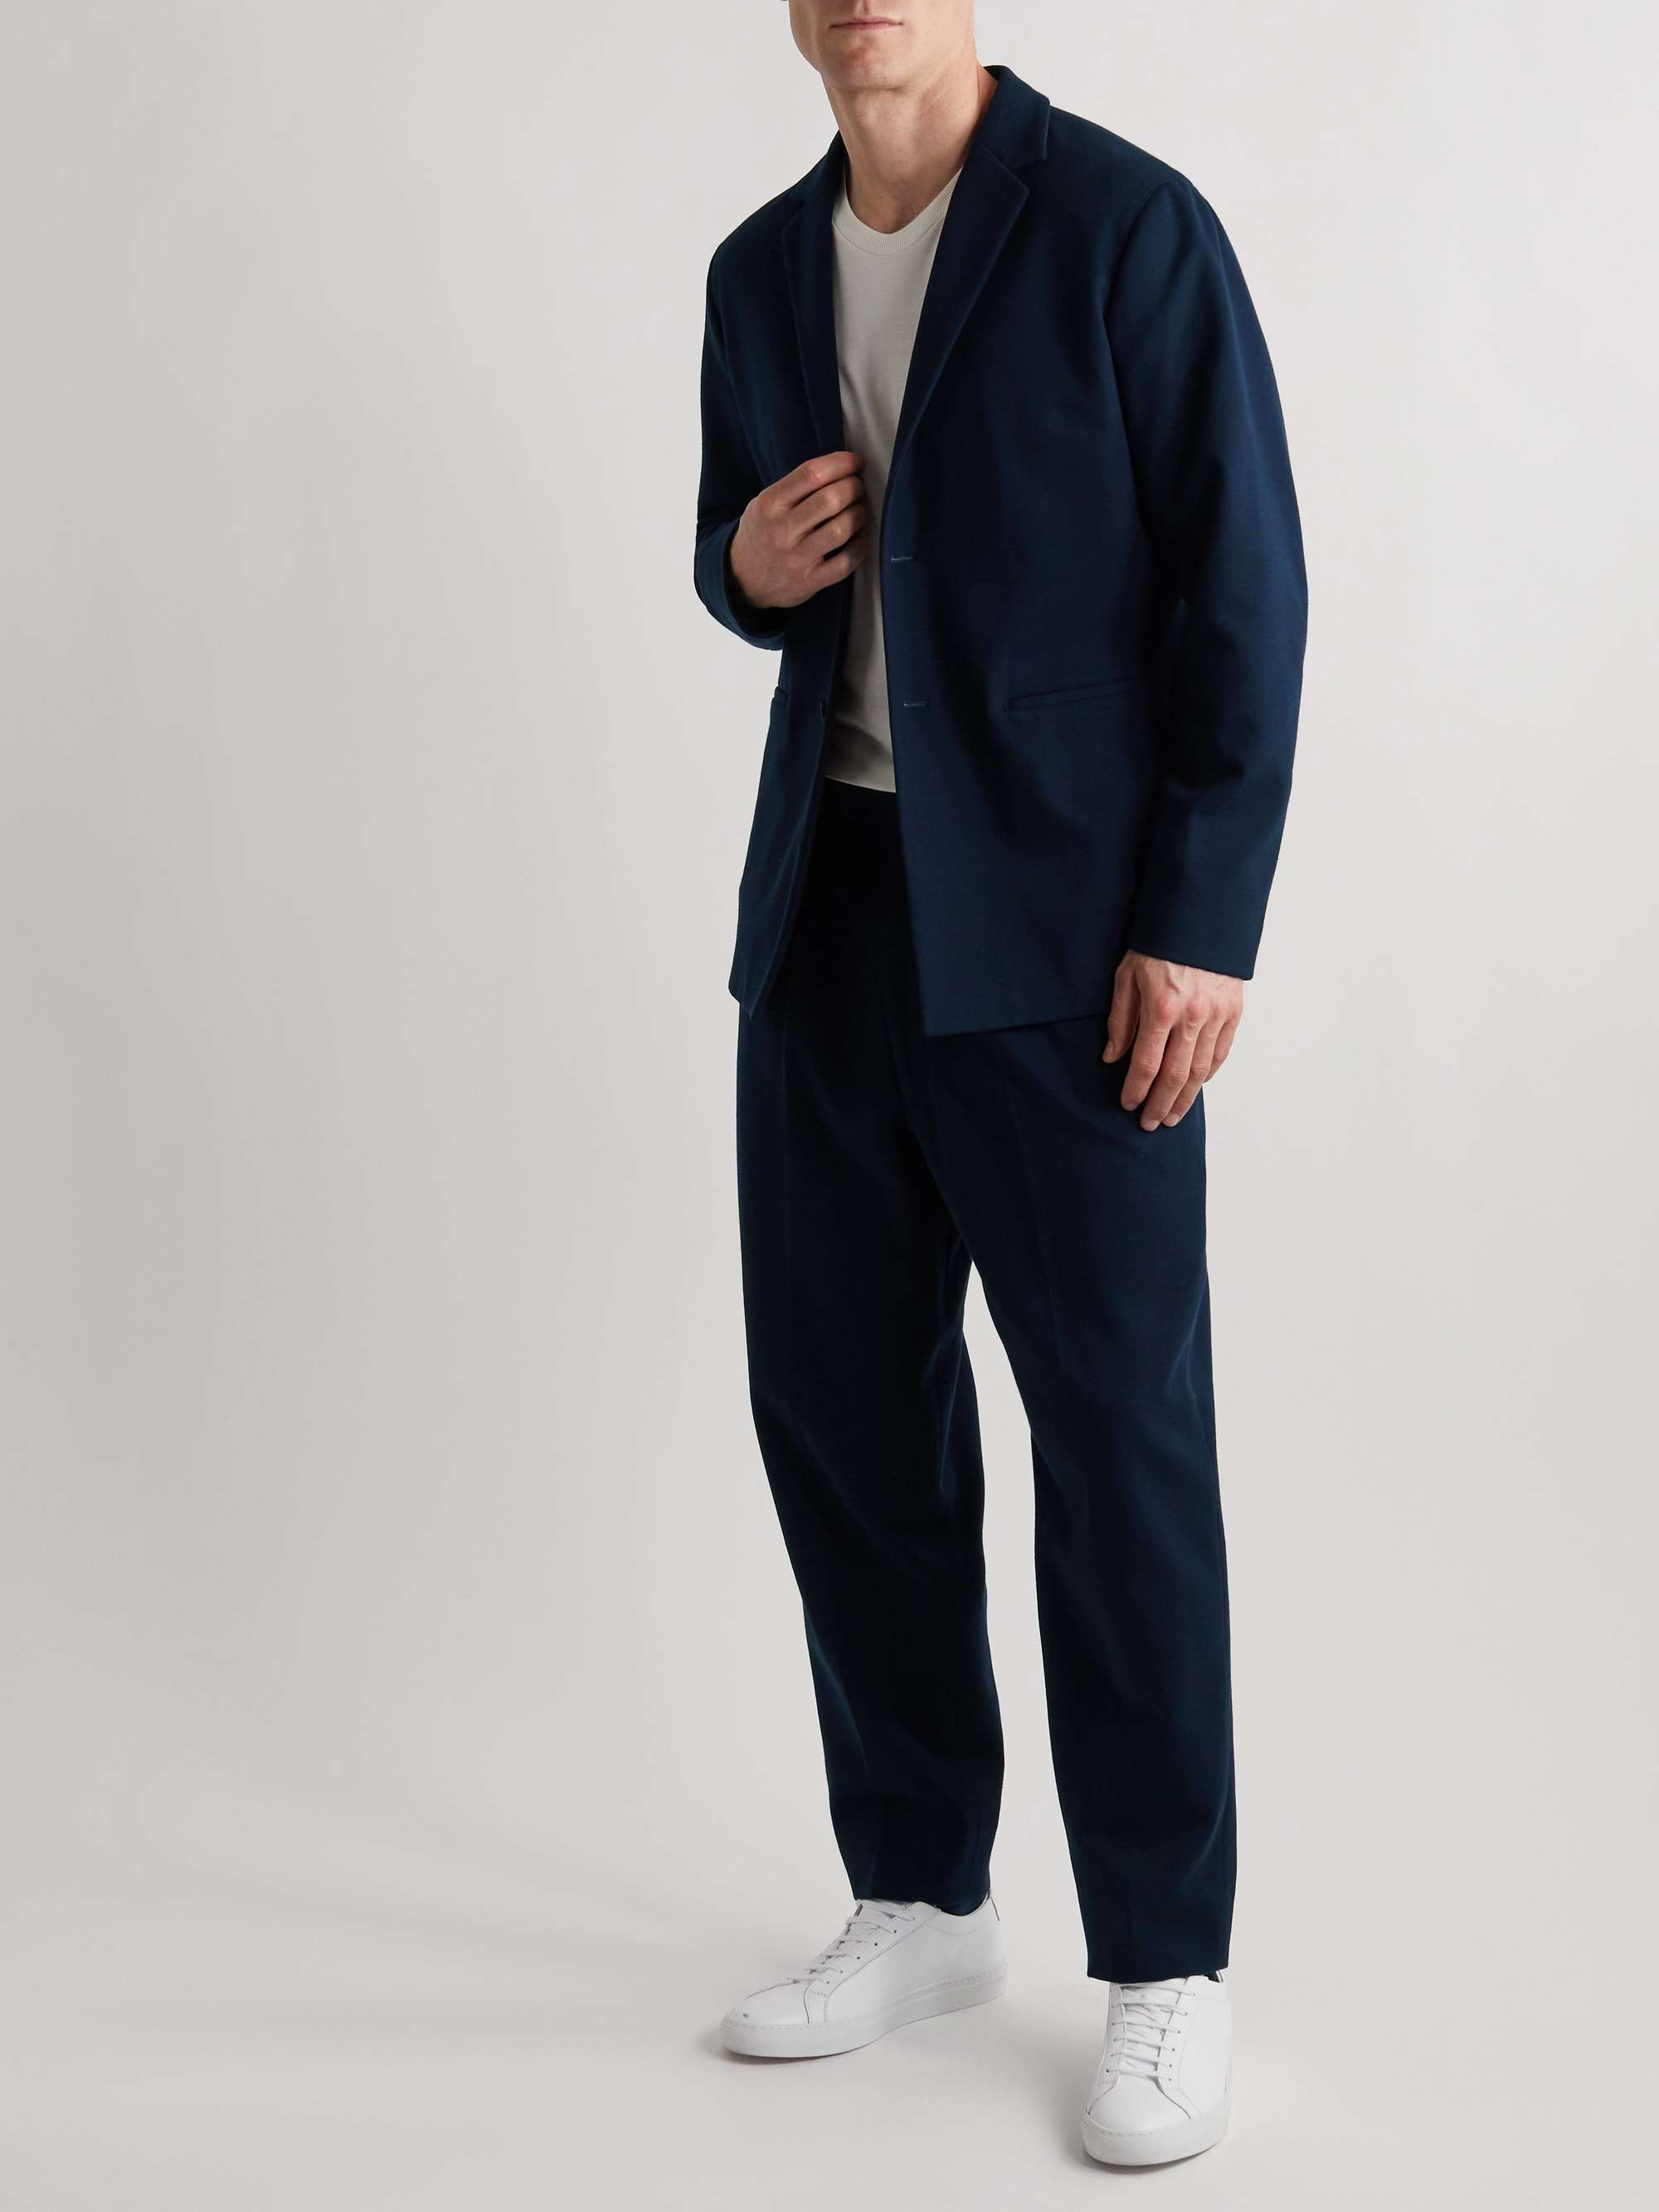 SUNSPEL + Casely Hayford Ekow Waffle-Knit Cotton-Blend Suit Jacket